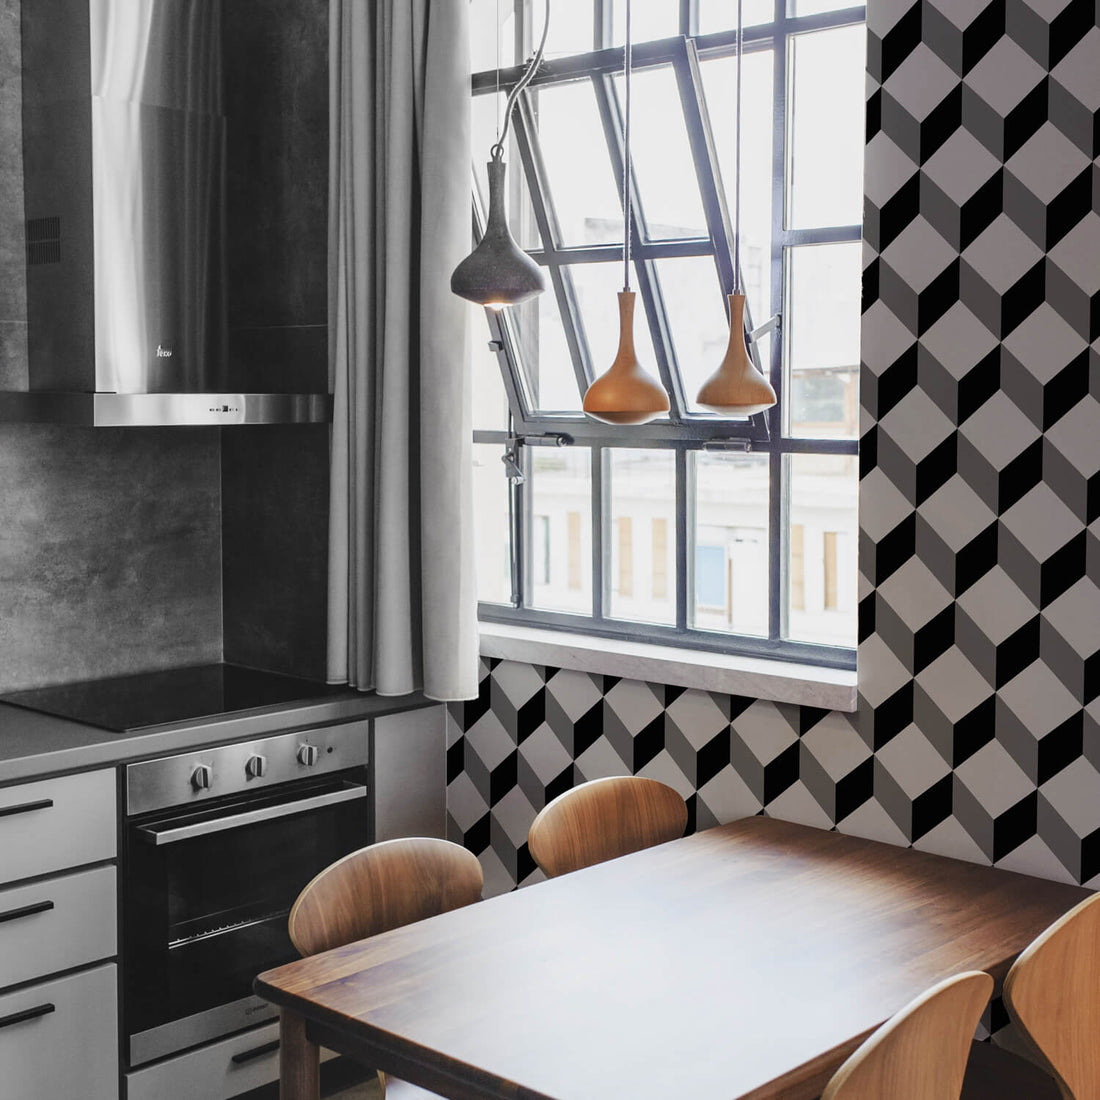 Dark grey kitchen interior with geometric cubes design accent wall